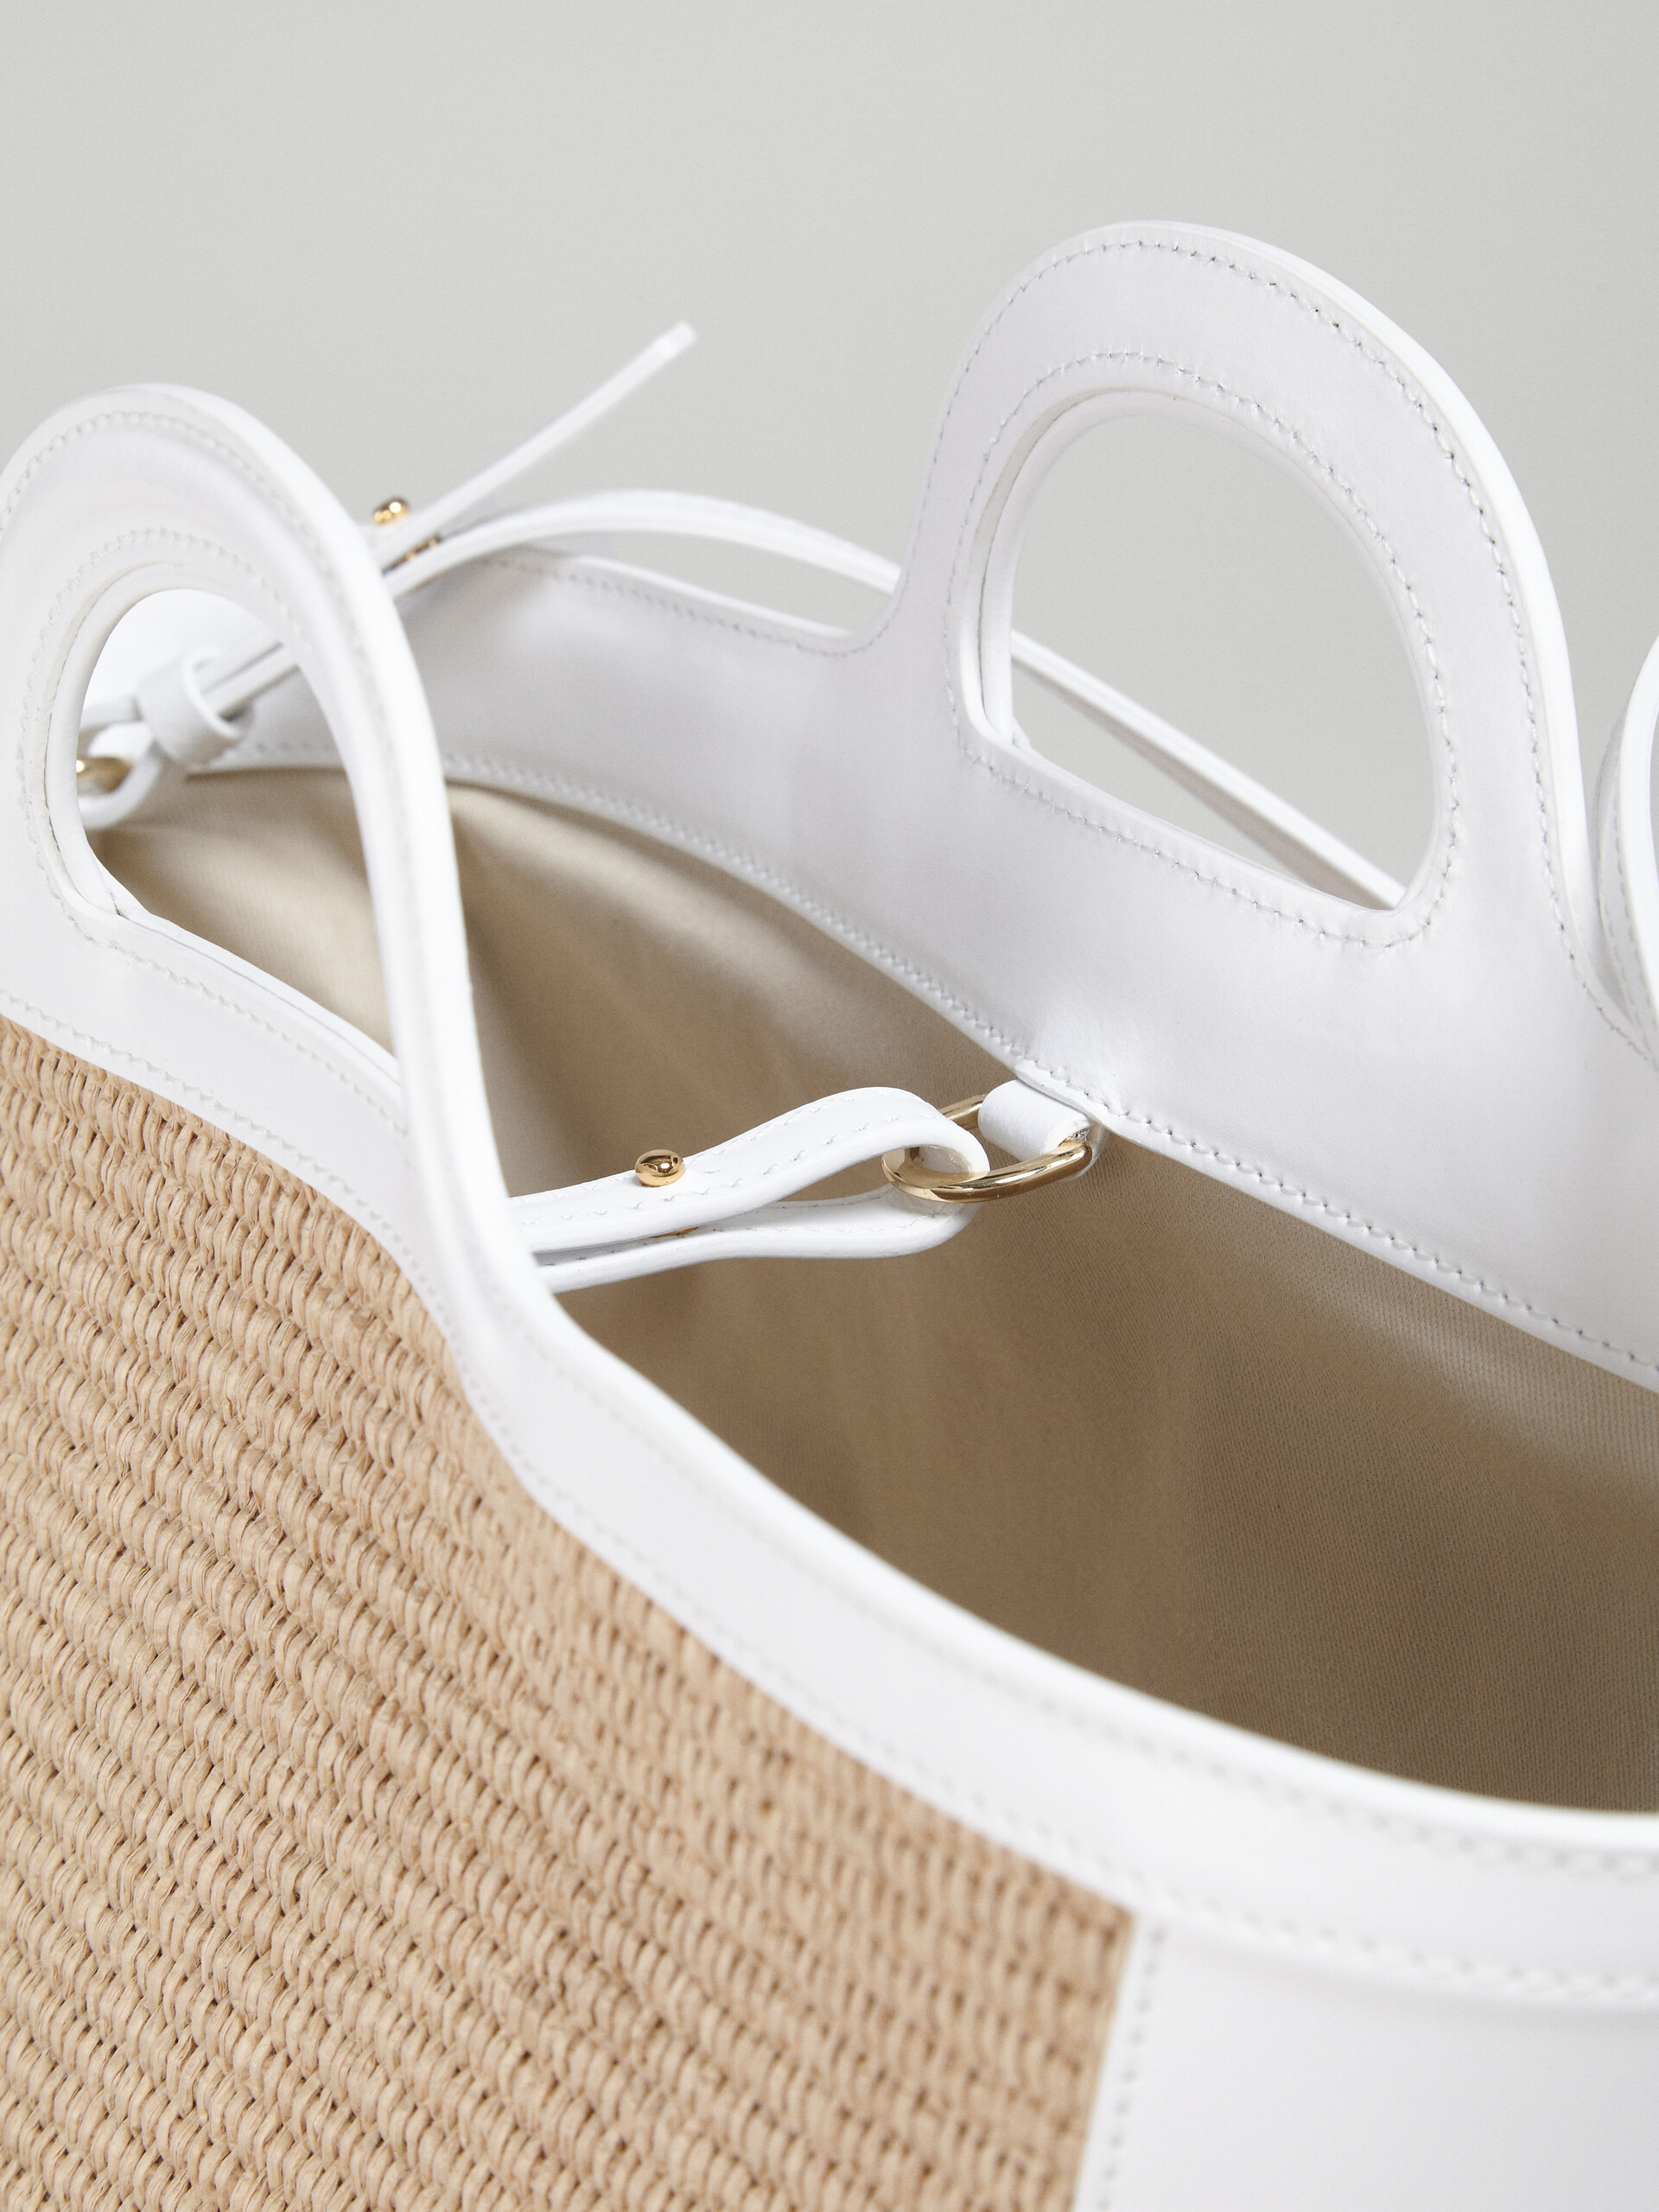 Tropicalia Small Bag in white leather and raffia - Handbags - Image 4